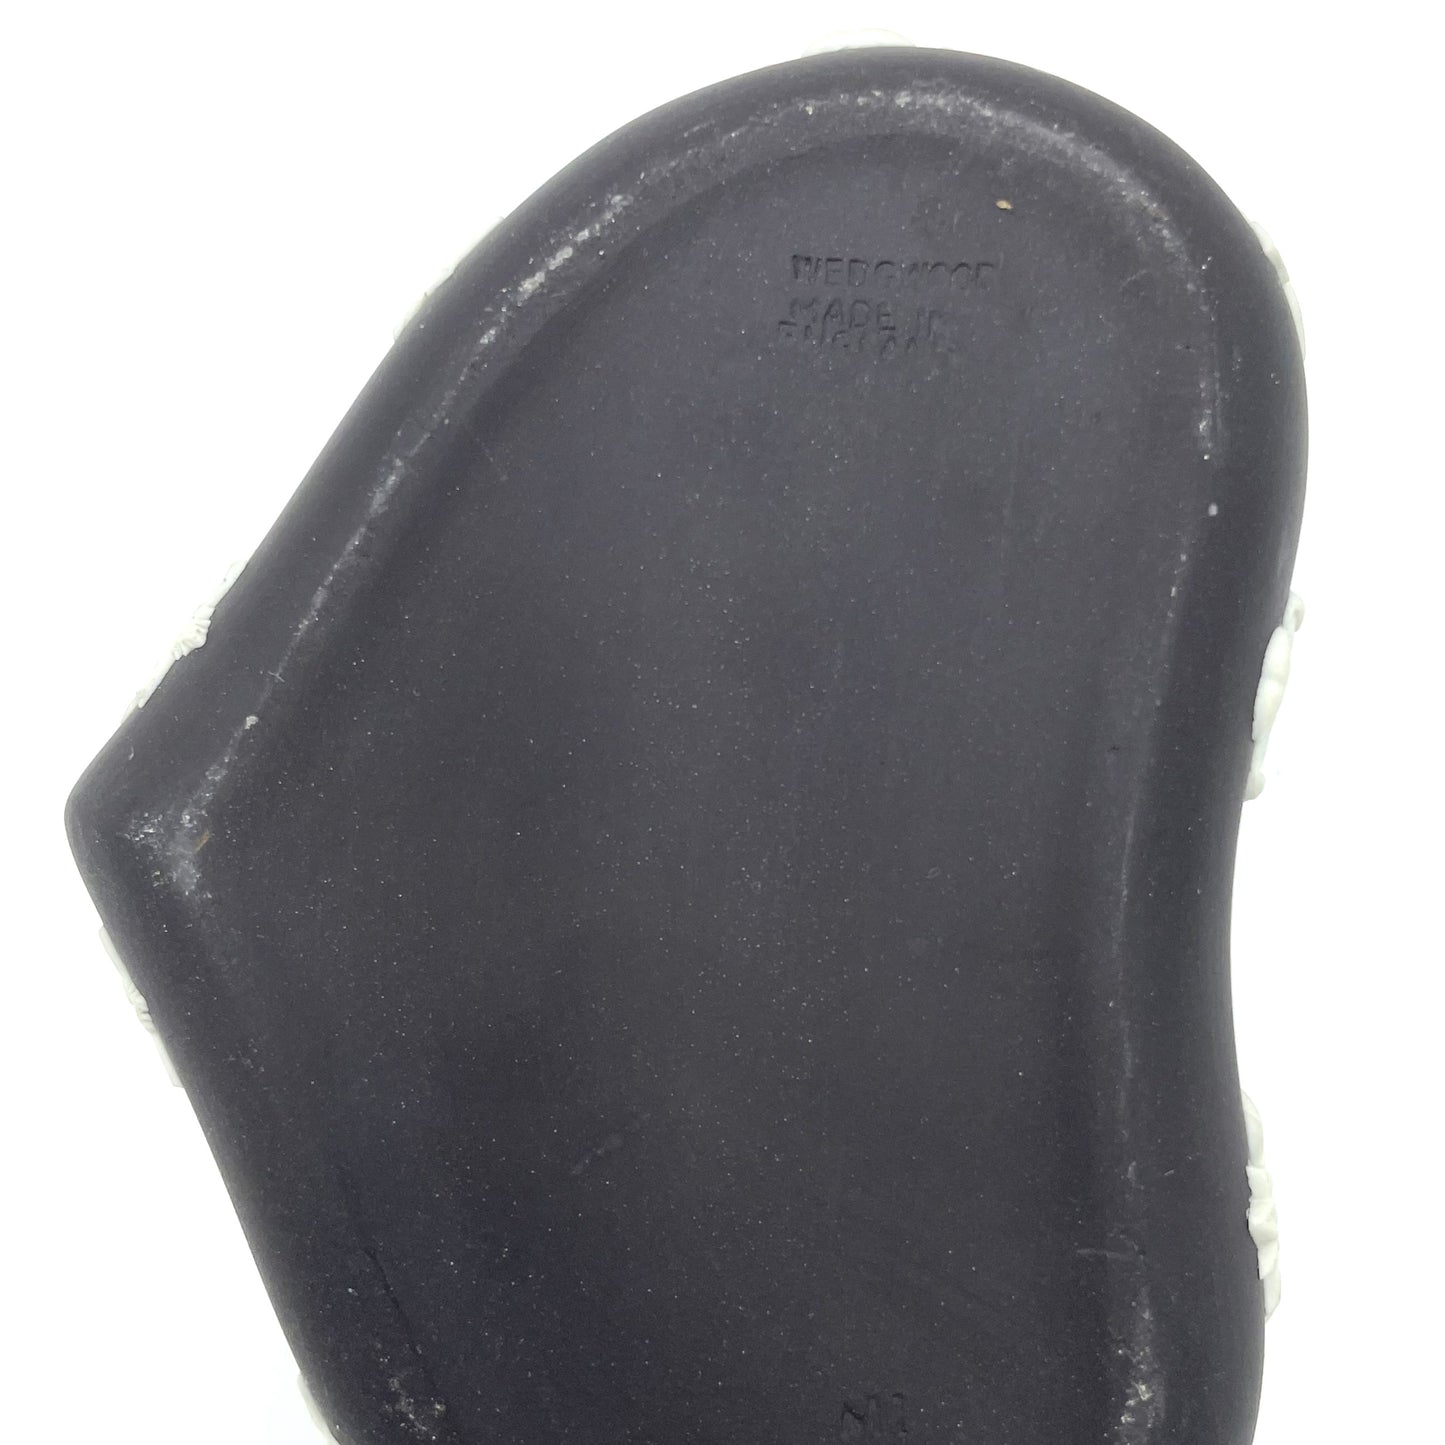 Rare Wedgwood Black Jasperware Heart Shaped Trinket Box - 13cm